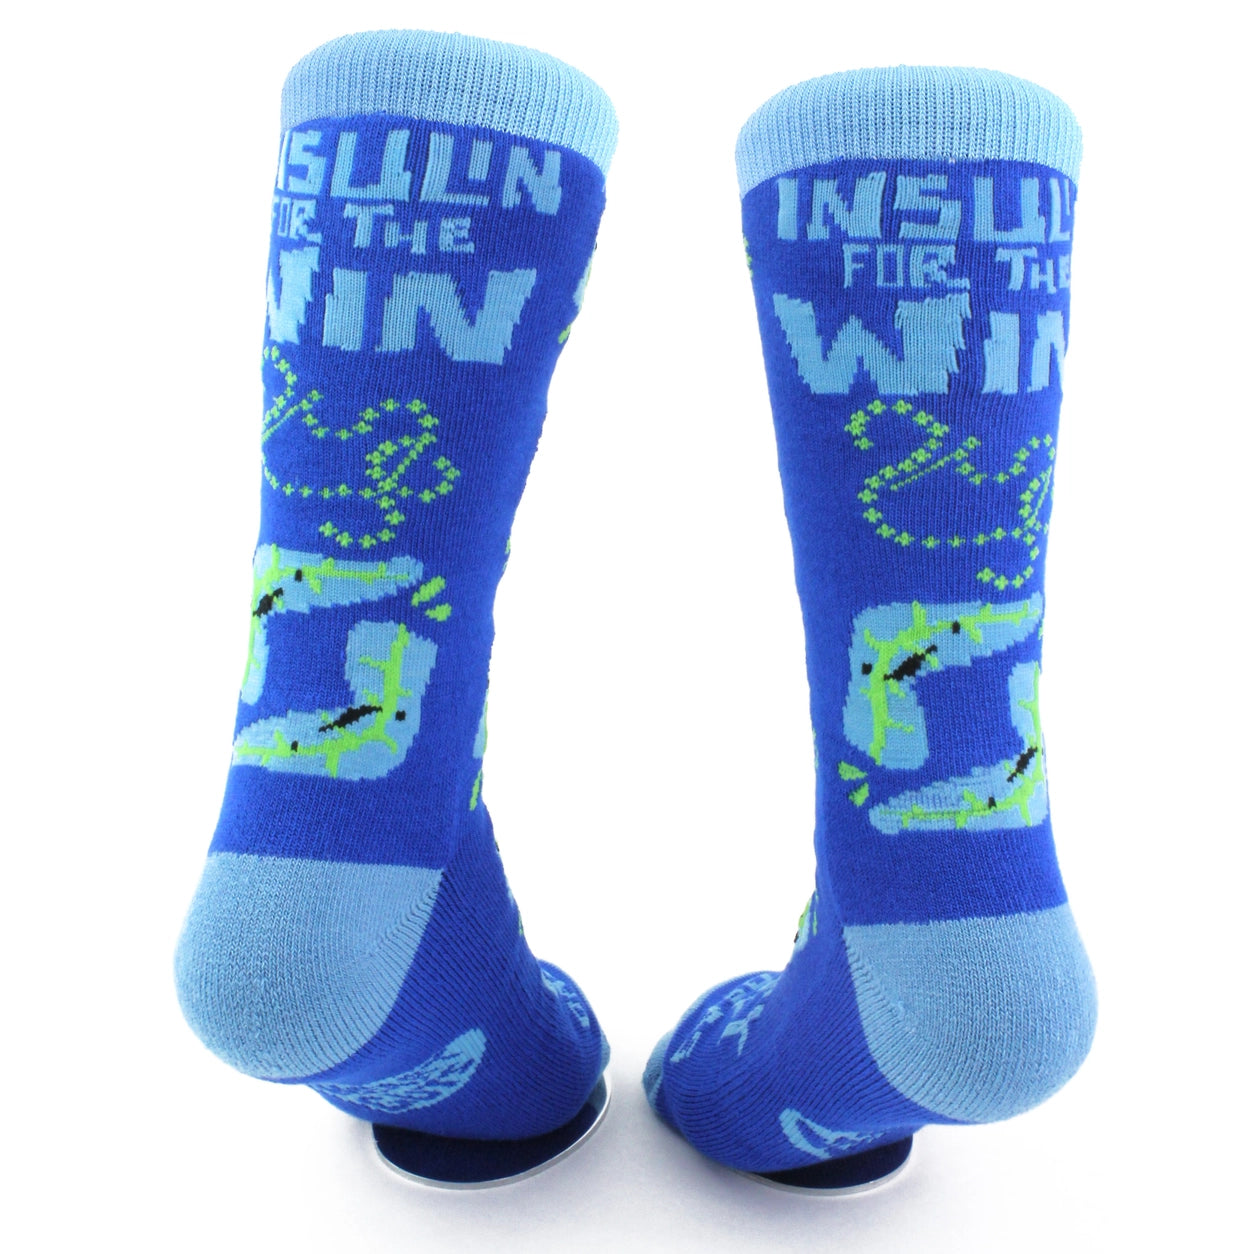 socks pancreas - Insulin for the Win